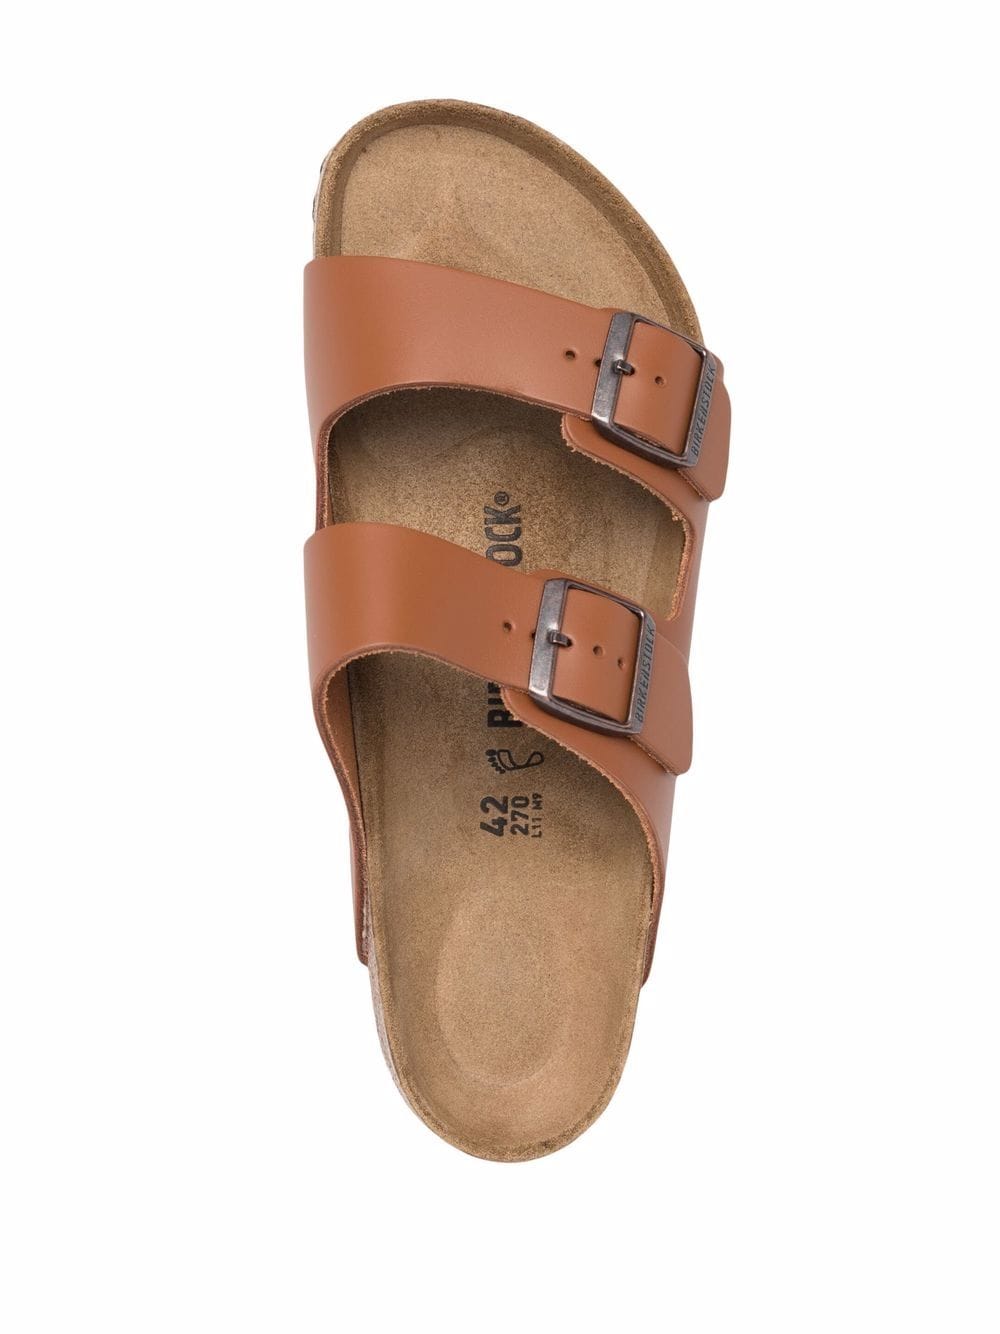 Birkenstock Arizona Leather Sandals - Farfetch